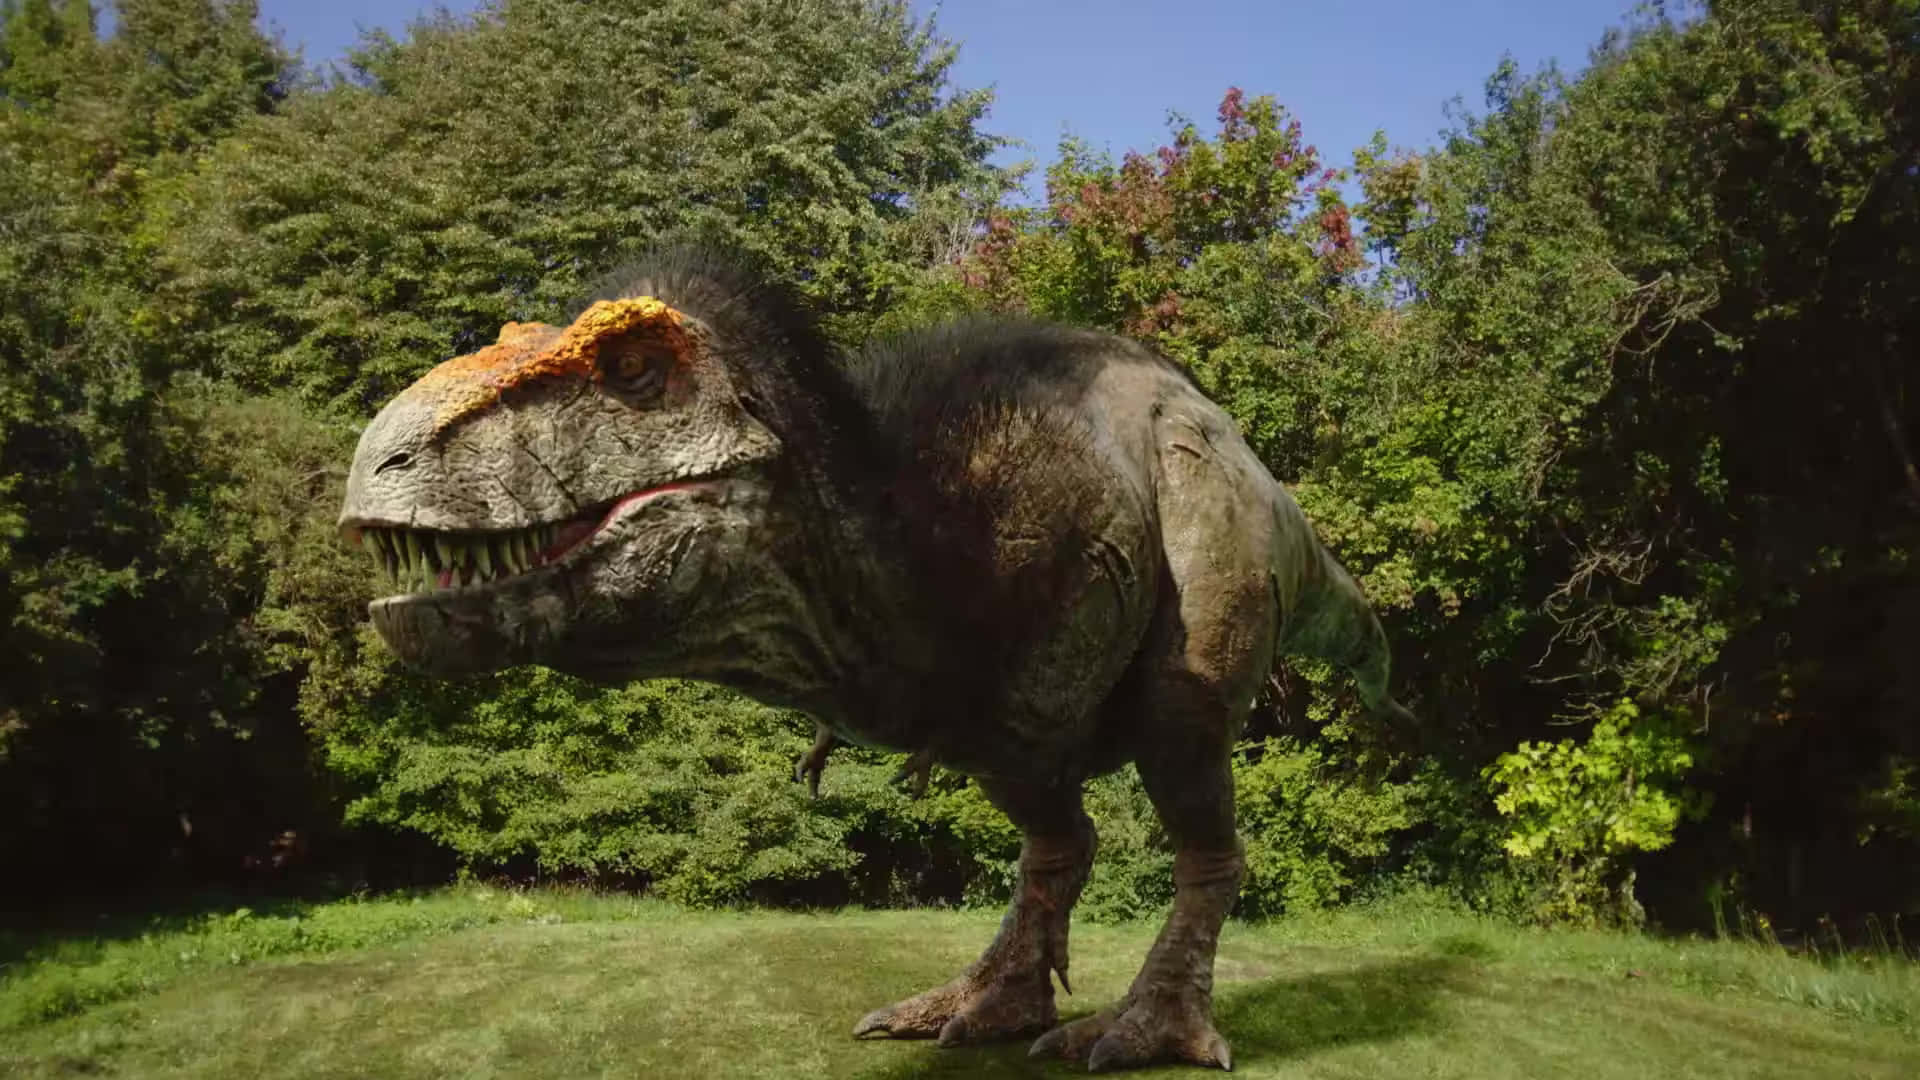 A Tyrannosaurus Rex in nature